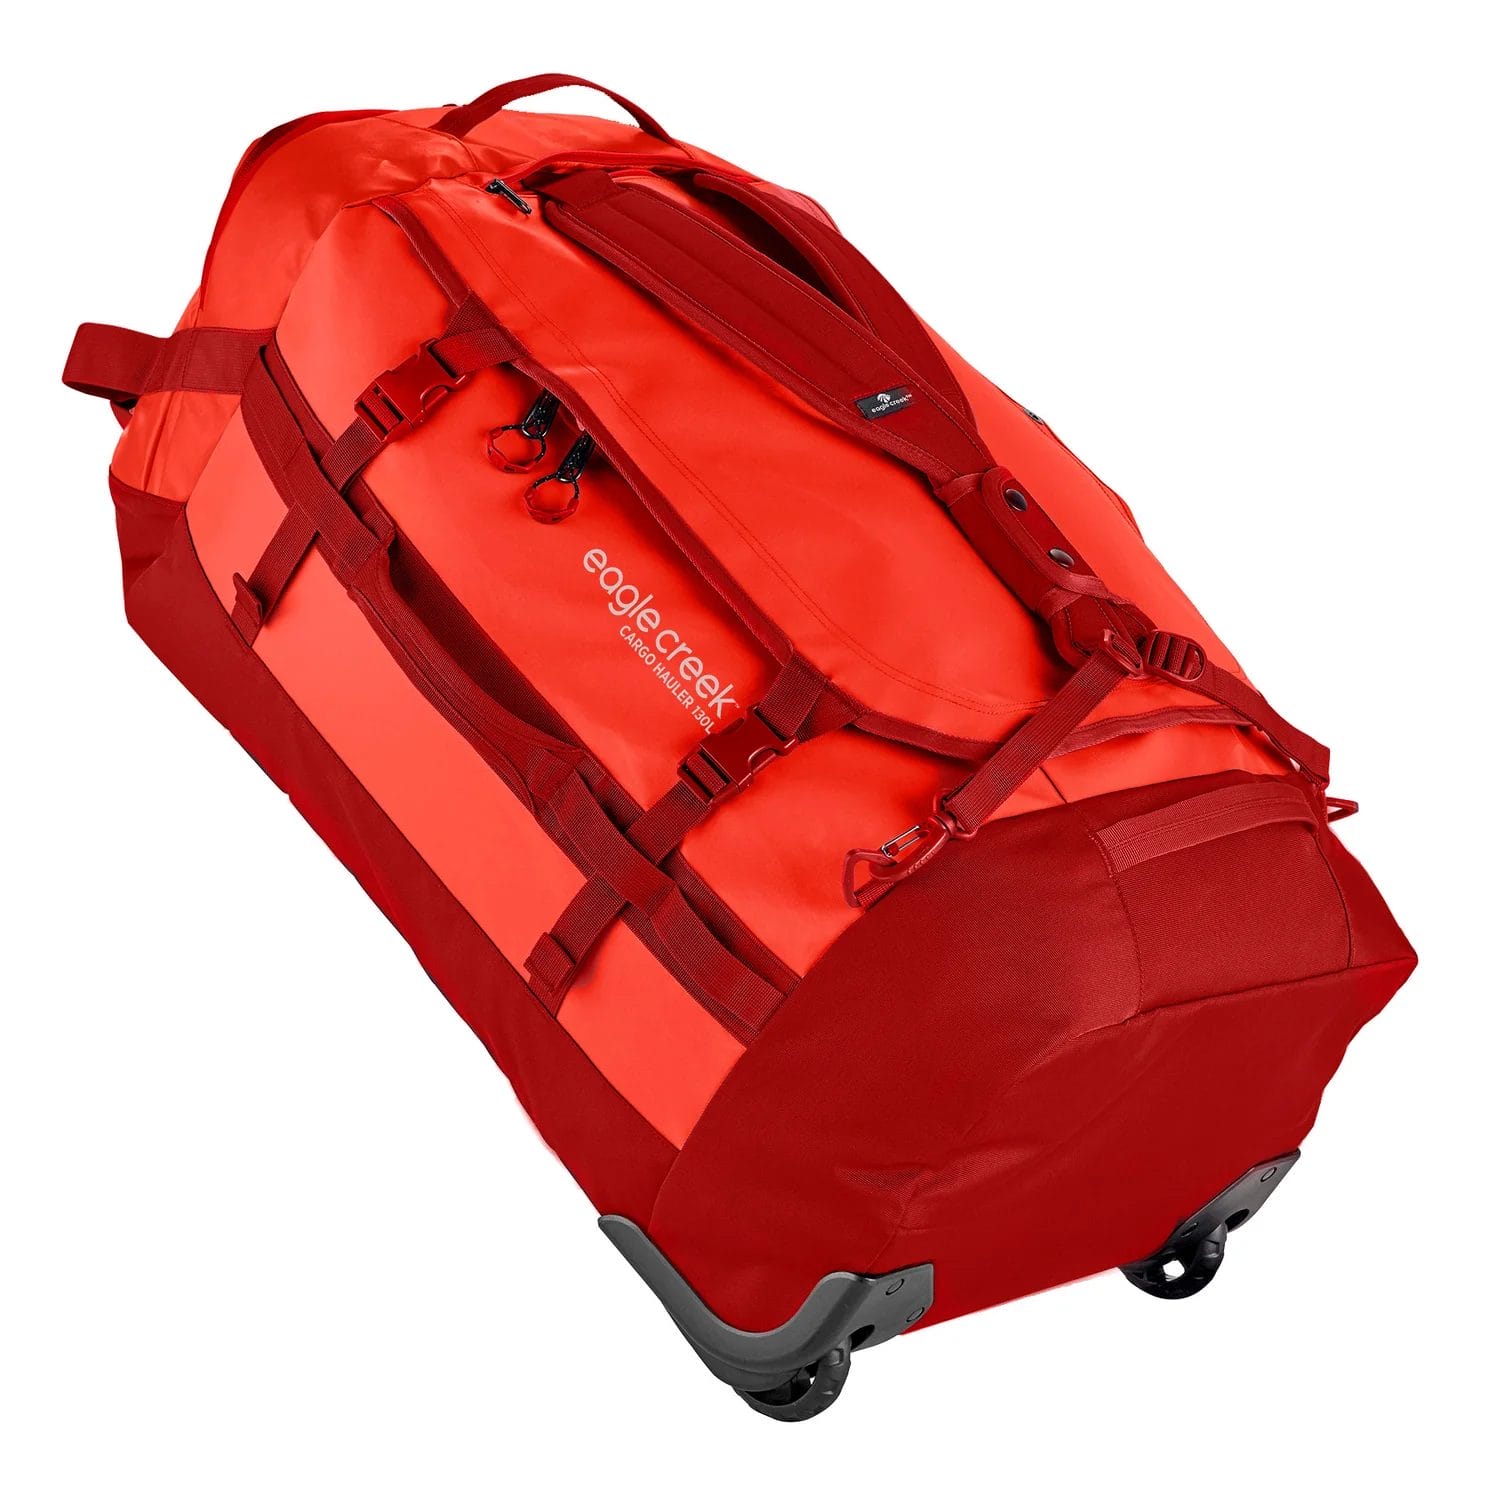 Cargo Hauler 130L Large Duffel Bag: Heavy-Duty Travel Bag